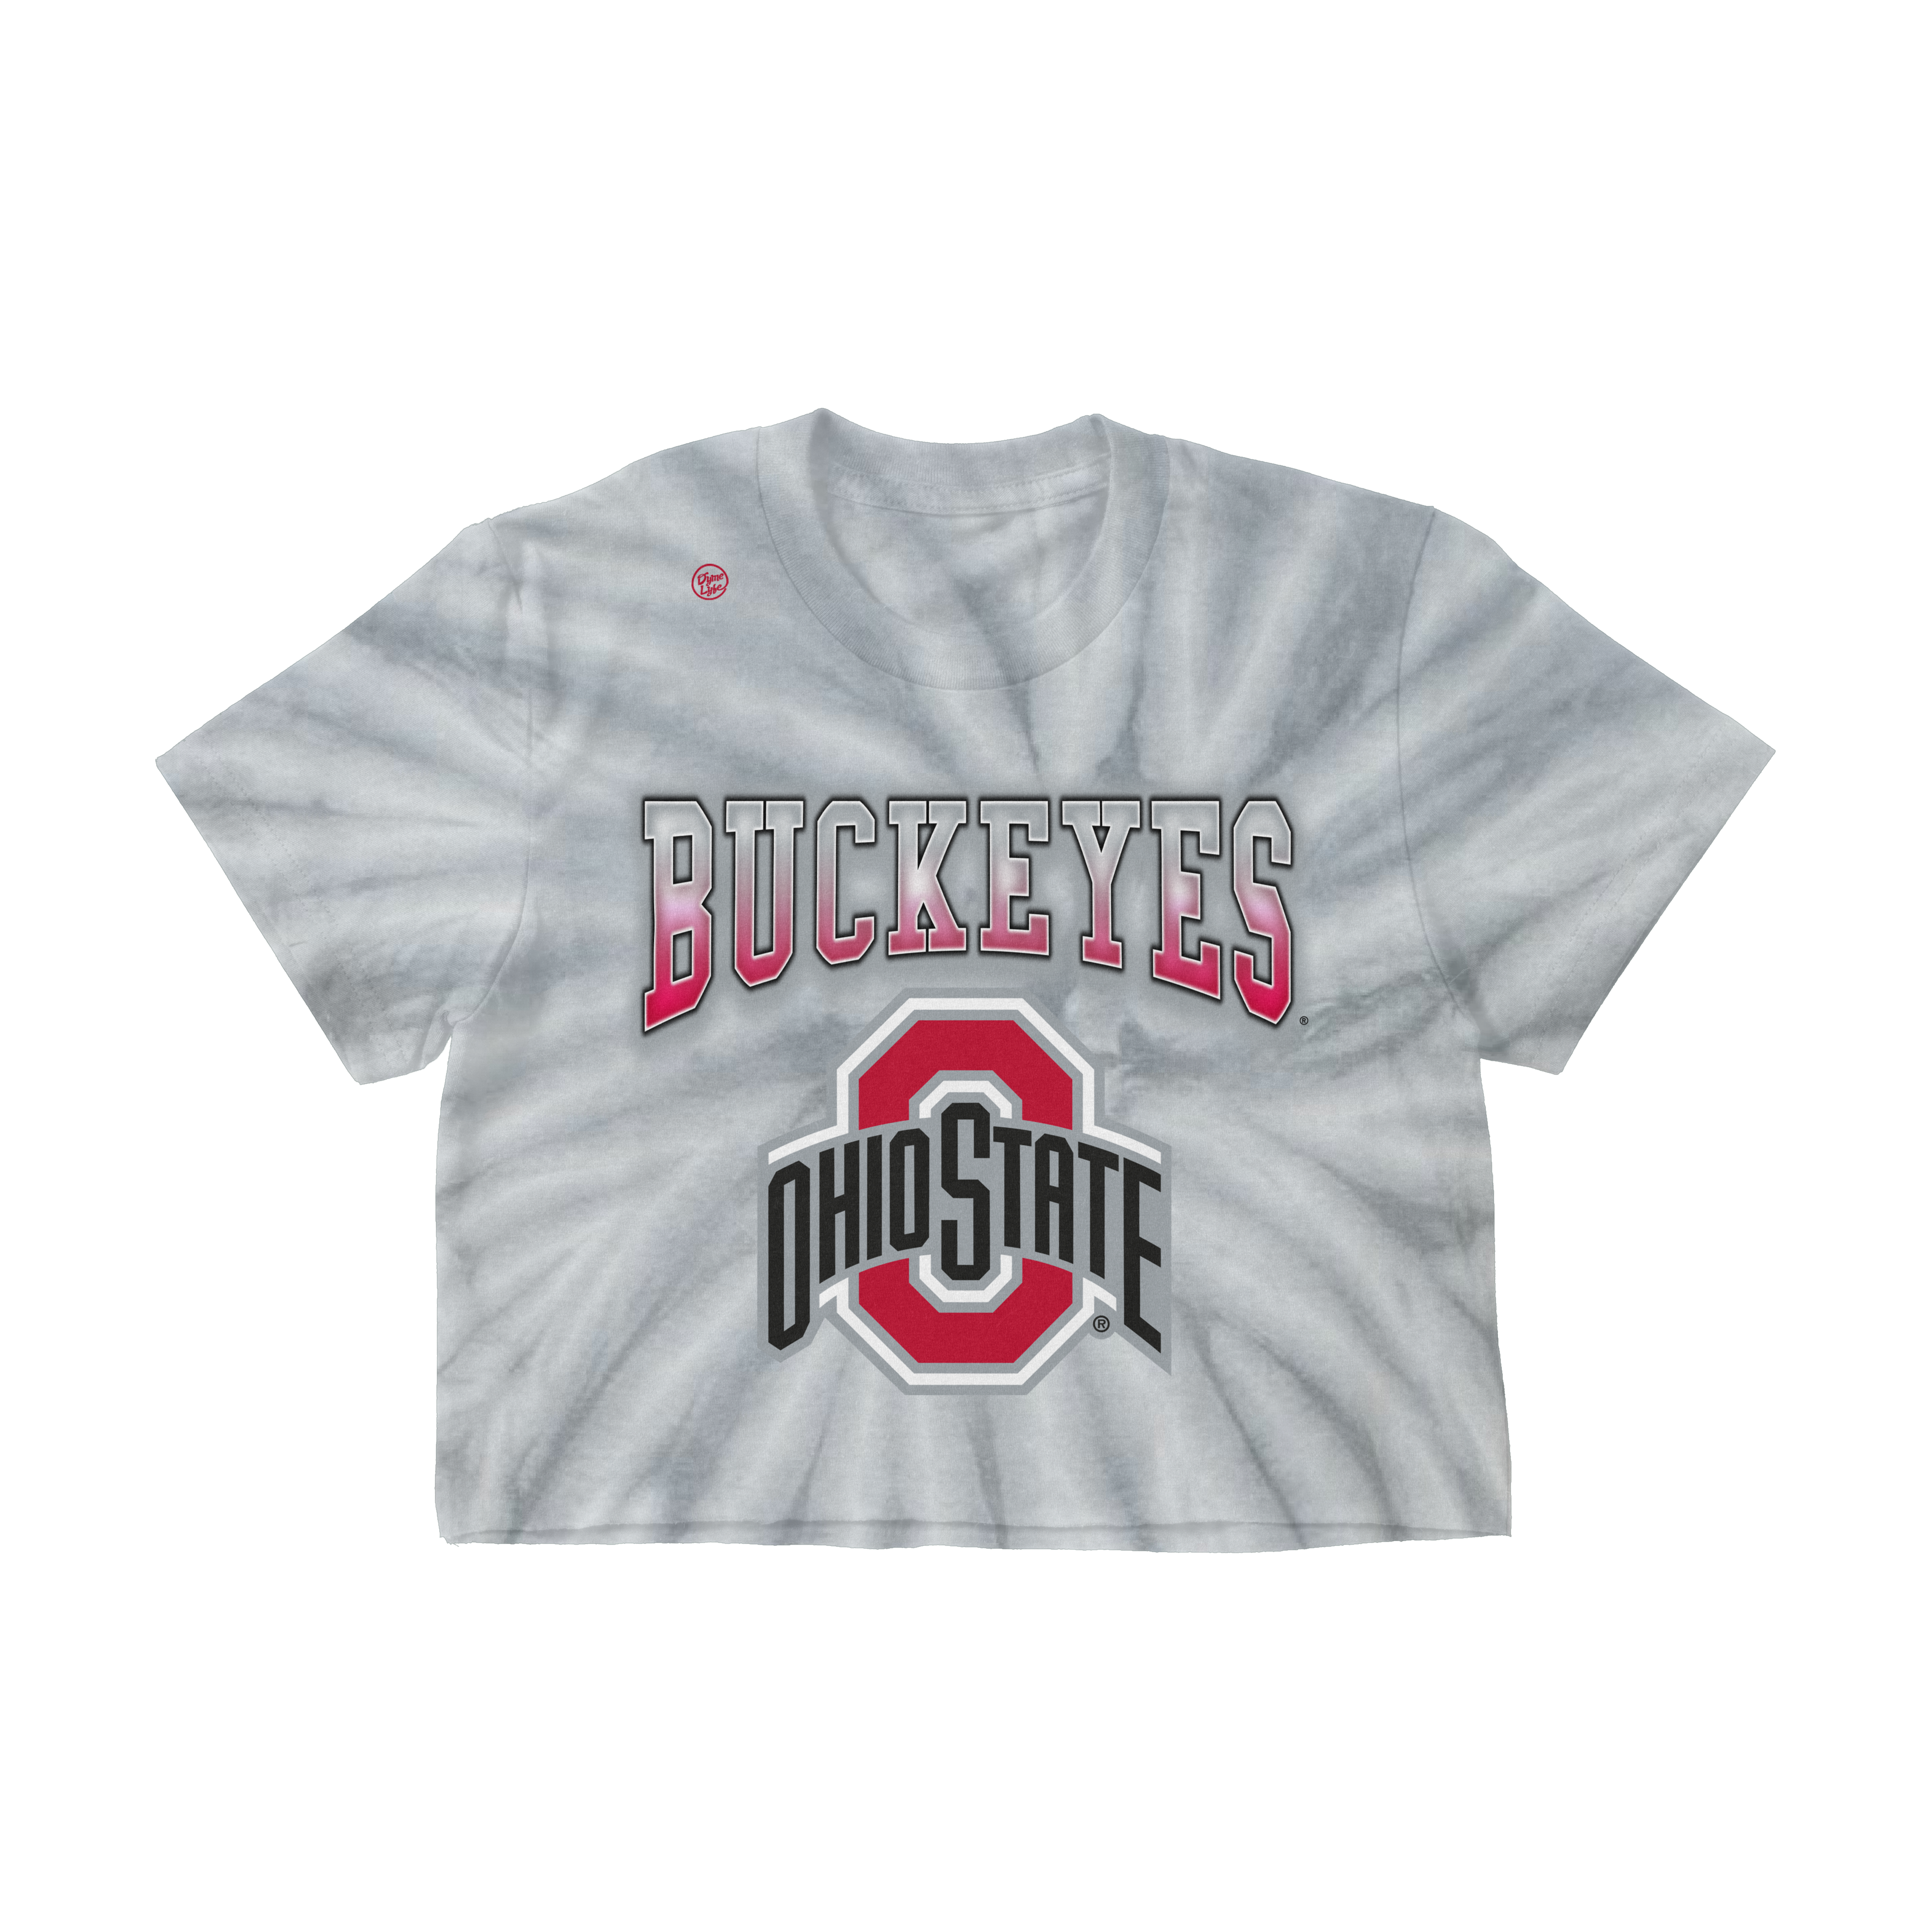 Ohio State Buckeyes Women’s Tie Dye Team Crop Top